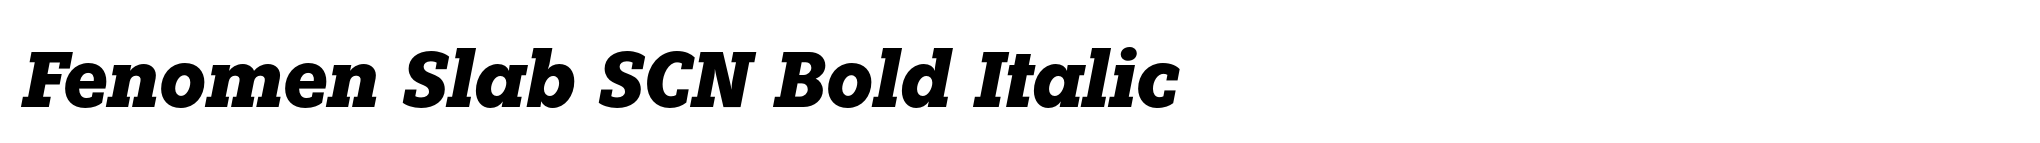 Fenomen Slab SCN Bold Italic image